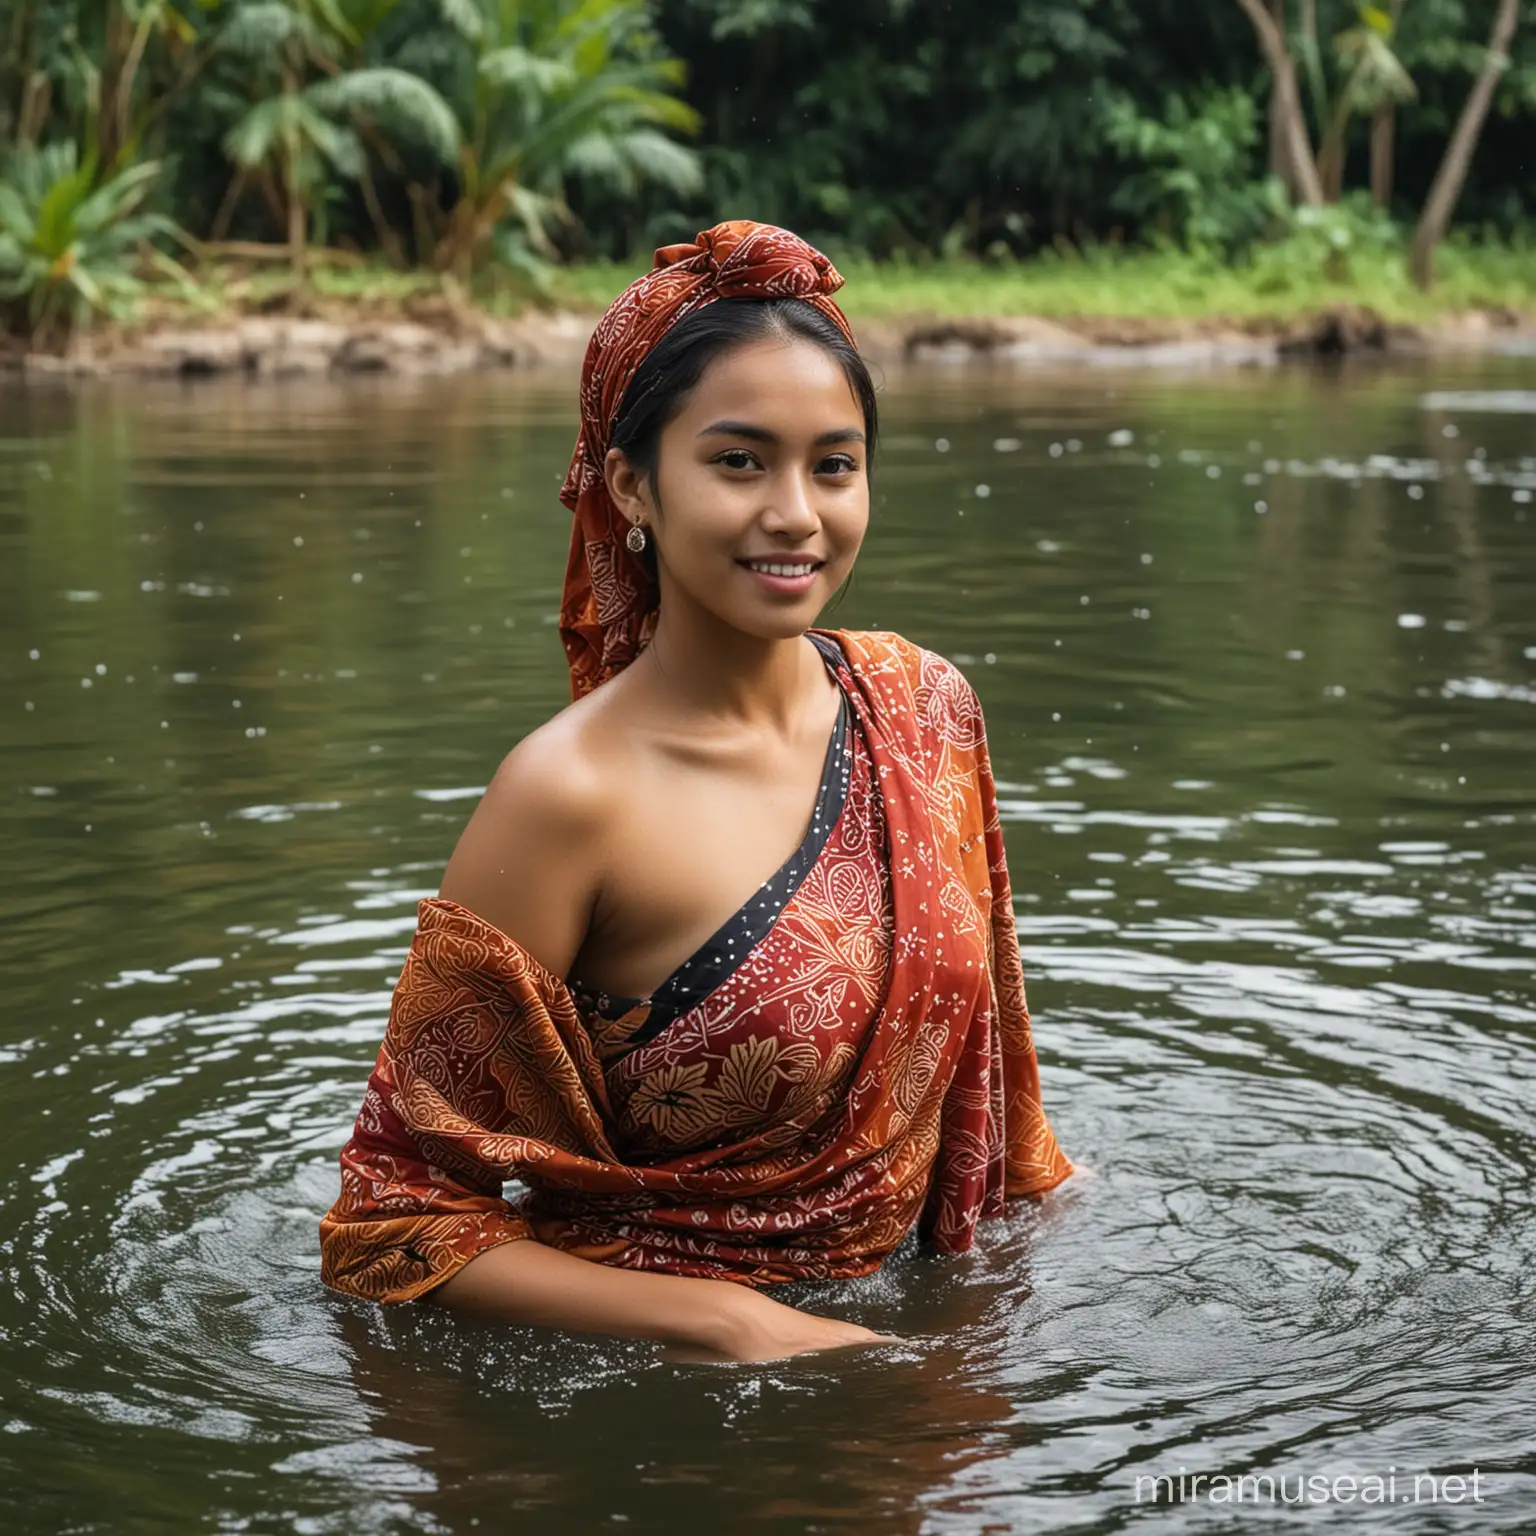 Malay Woman in Batik Sarong Enjoying River Bath